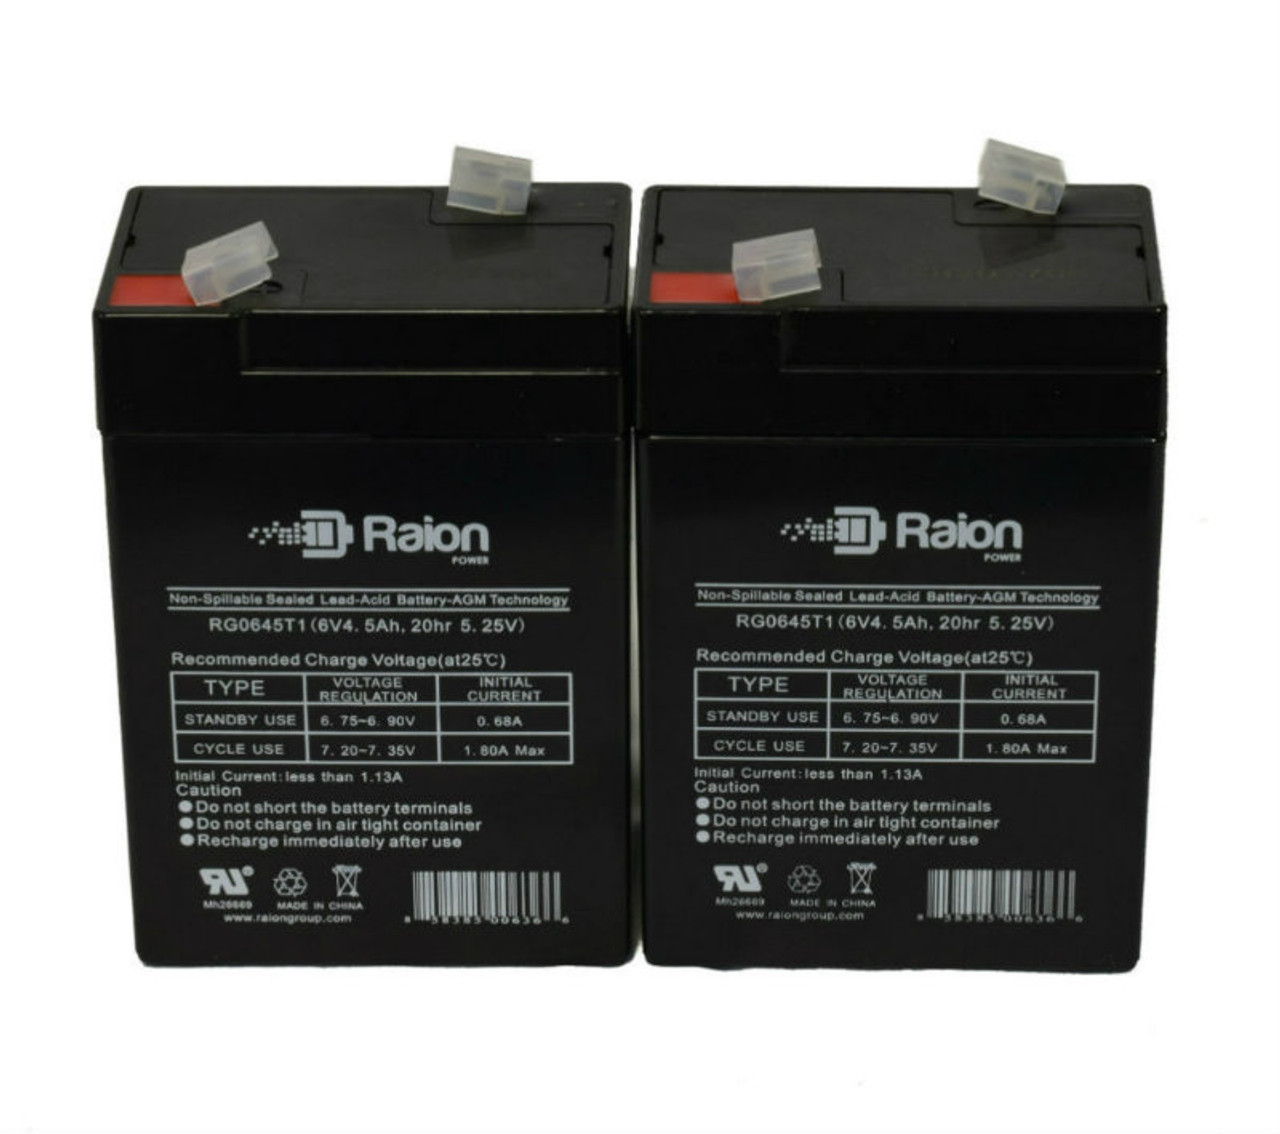 Raion Power 6V 4.5Ah Replacement Emergency Light Battery for Sentry Lite PM640 - 2 Pack